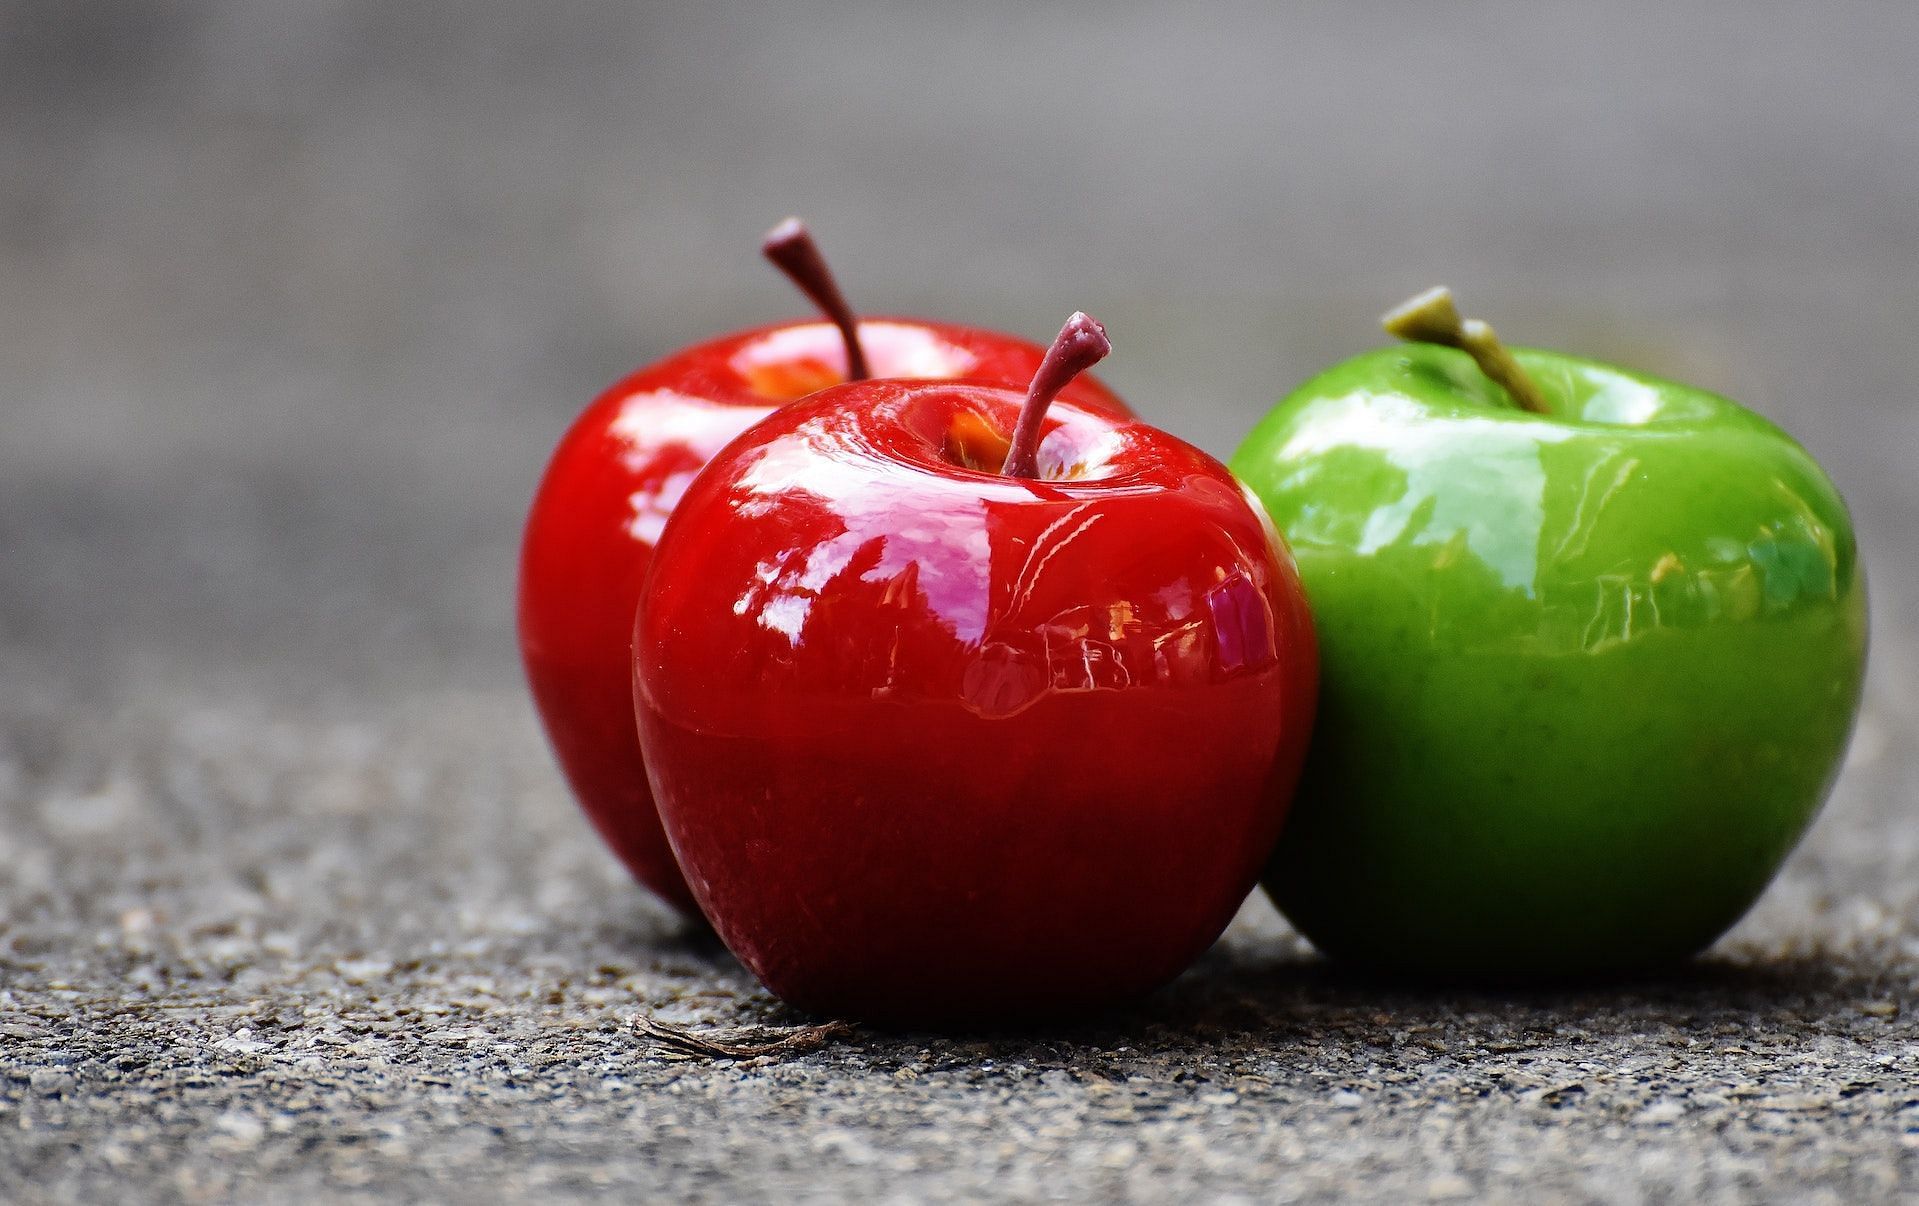 Fruits have anti-carcinogenic properties. (Photo via Pexels/Pixabay)